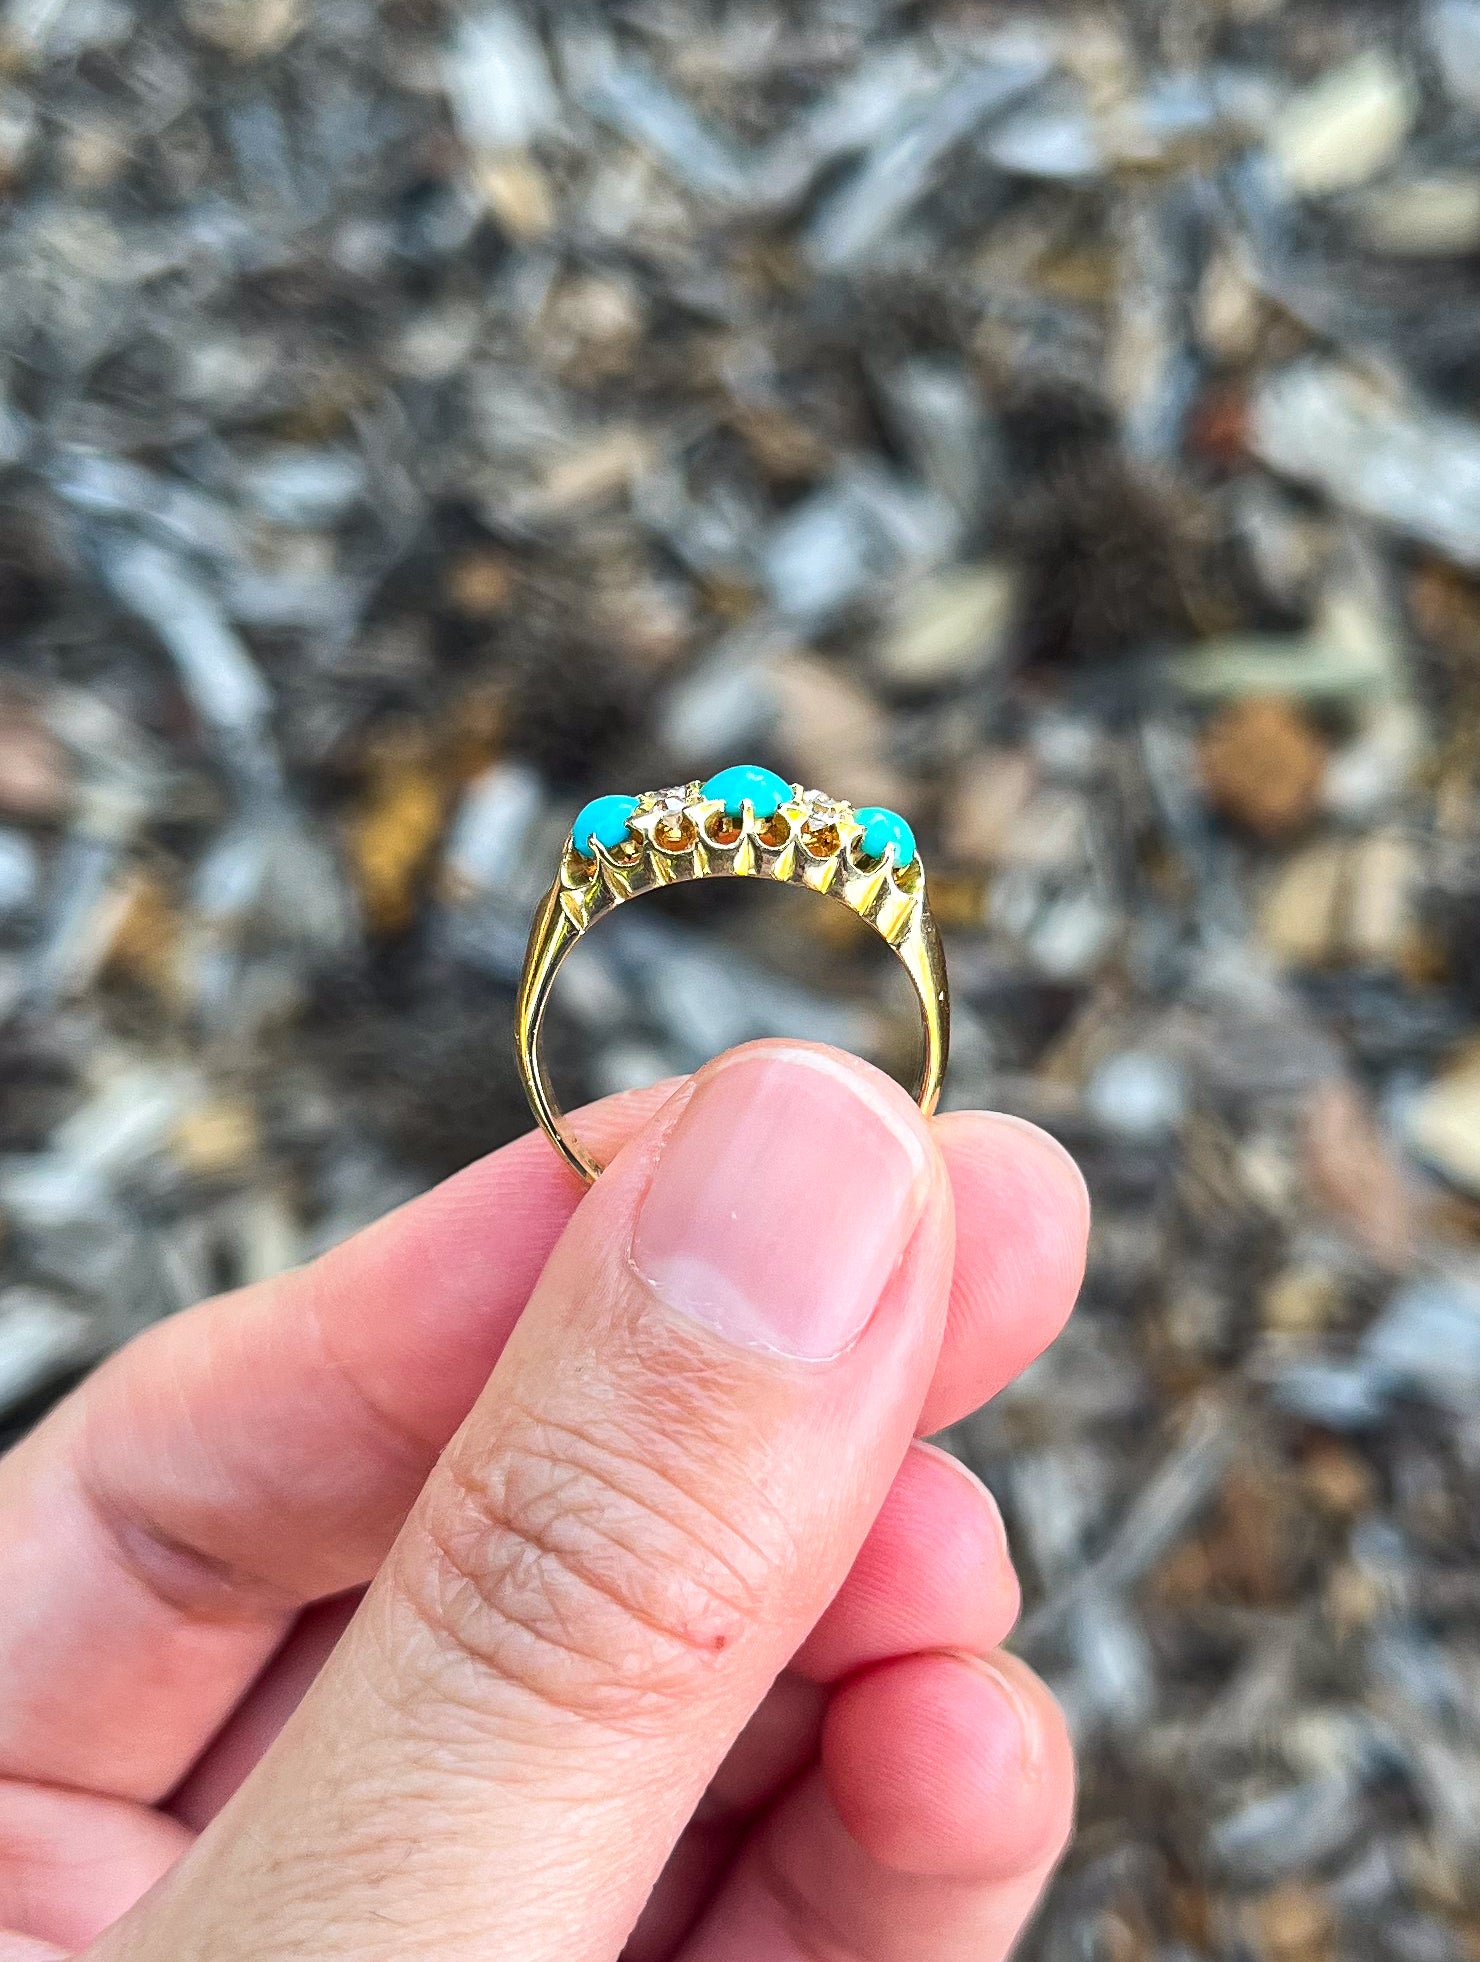 Antique Victorian Turquoise Diamonds 18k Gold Ring (UK 1880s) old mine cut diamonds (US size 5.75) Art Nouveau style, sustainable jewelry